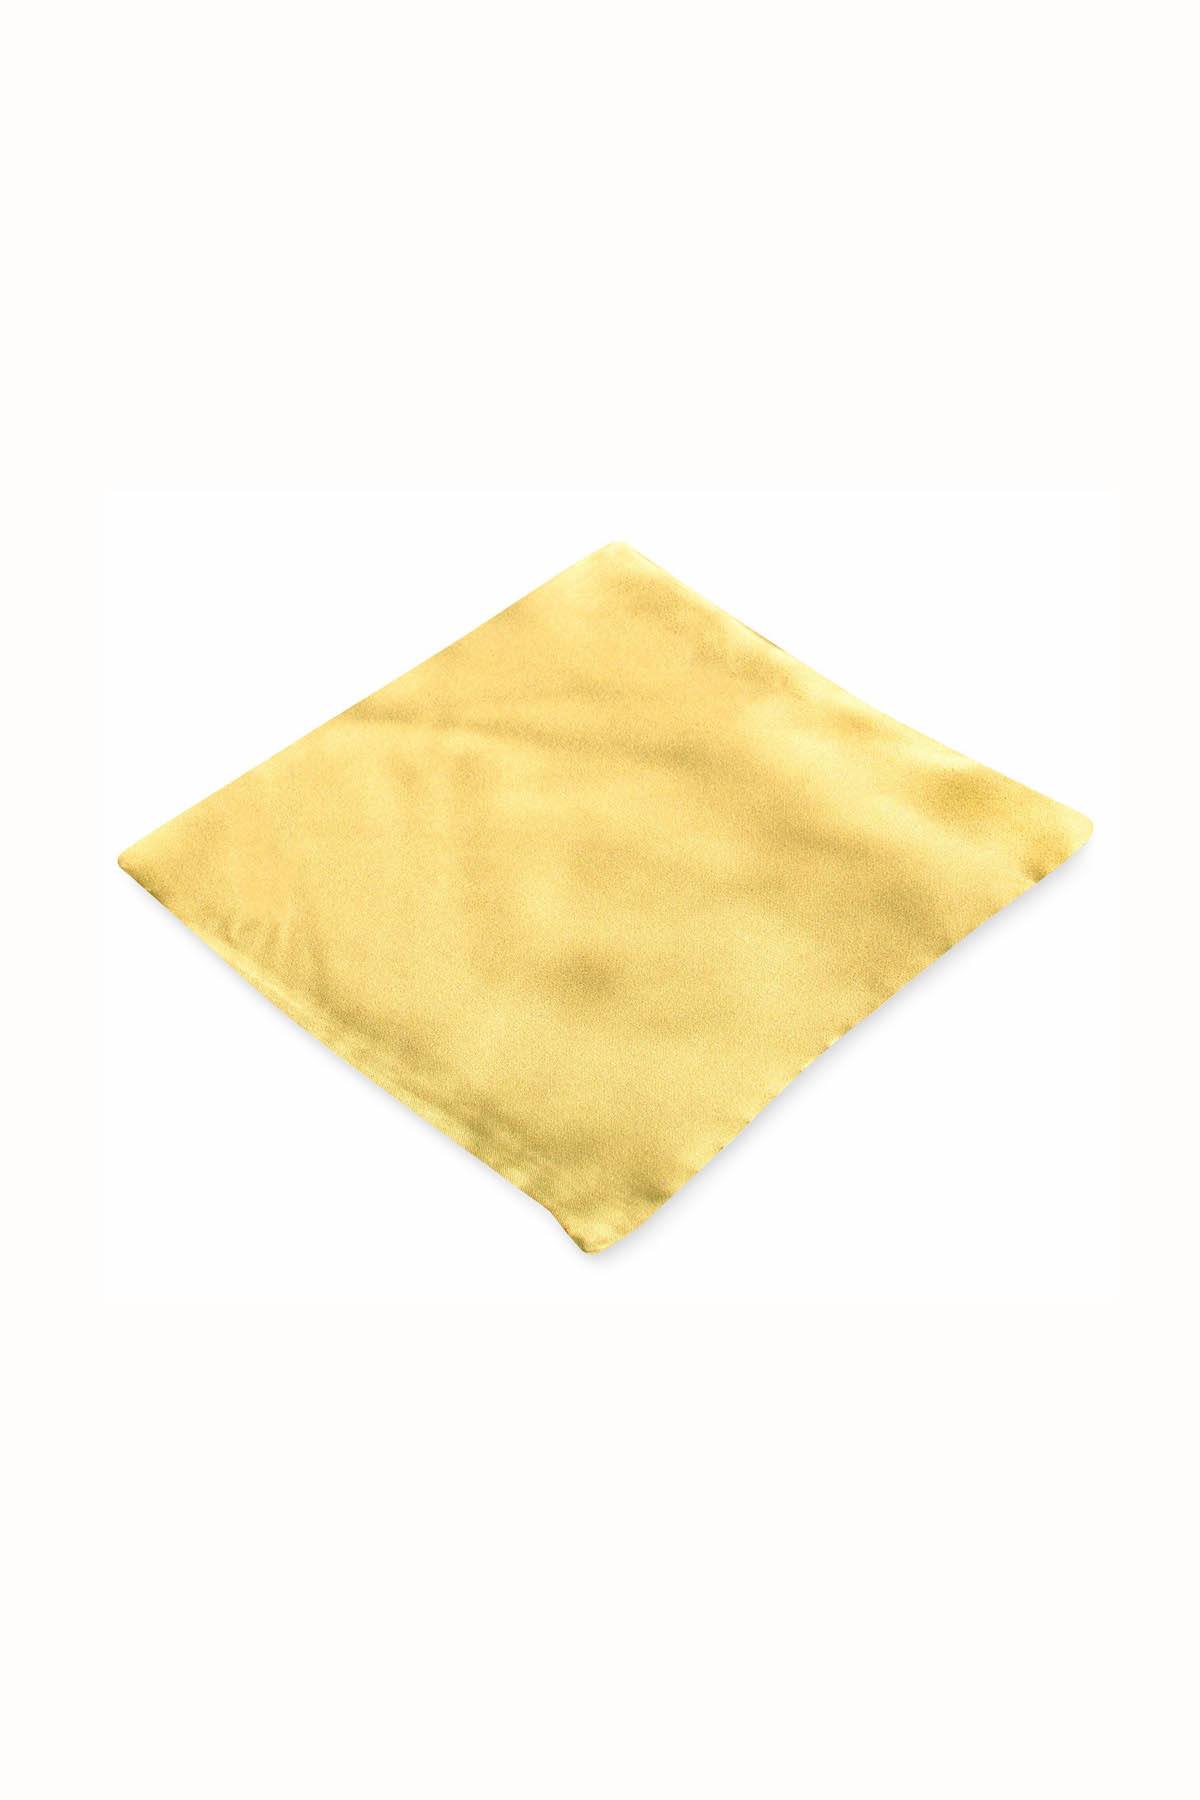 Club Room Solid-Gold Silk Handkerchief/Pocket Square